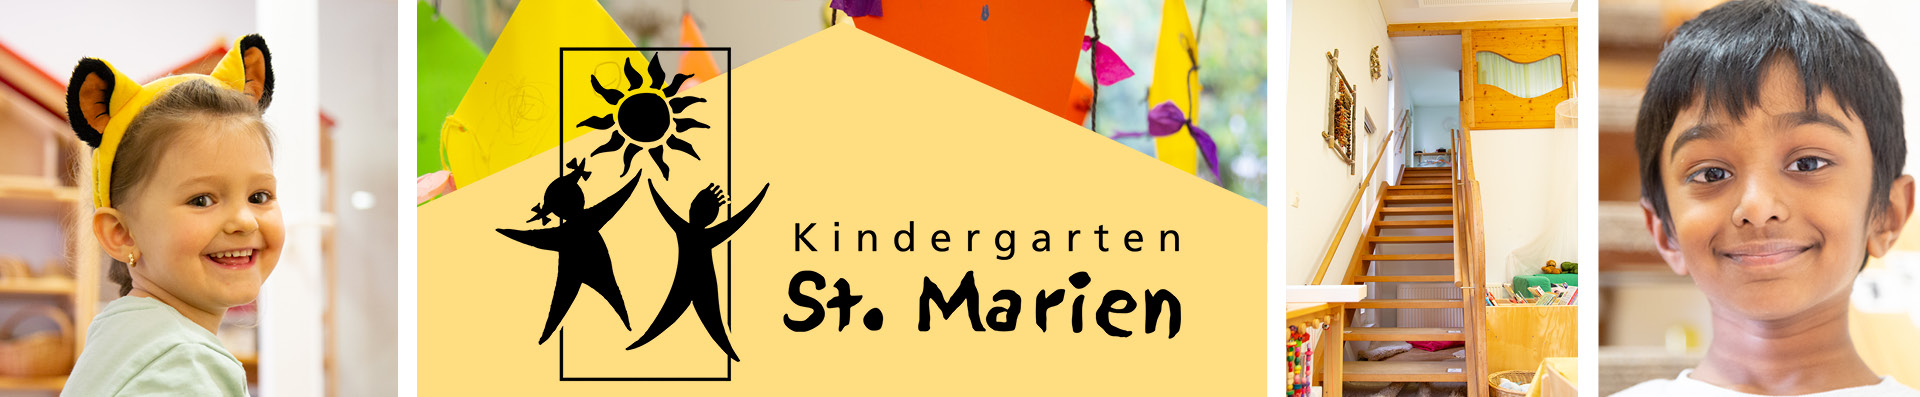 Kindergarten St. Marien Walldorf